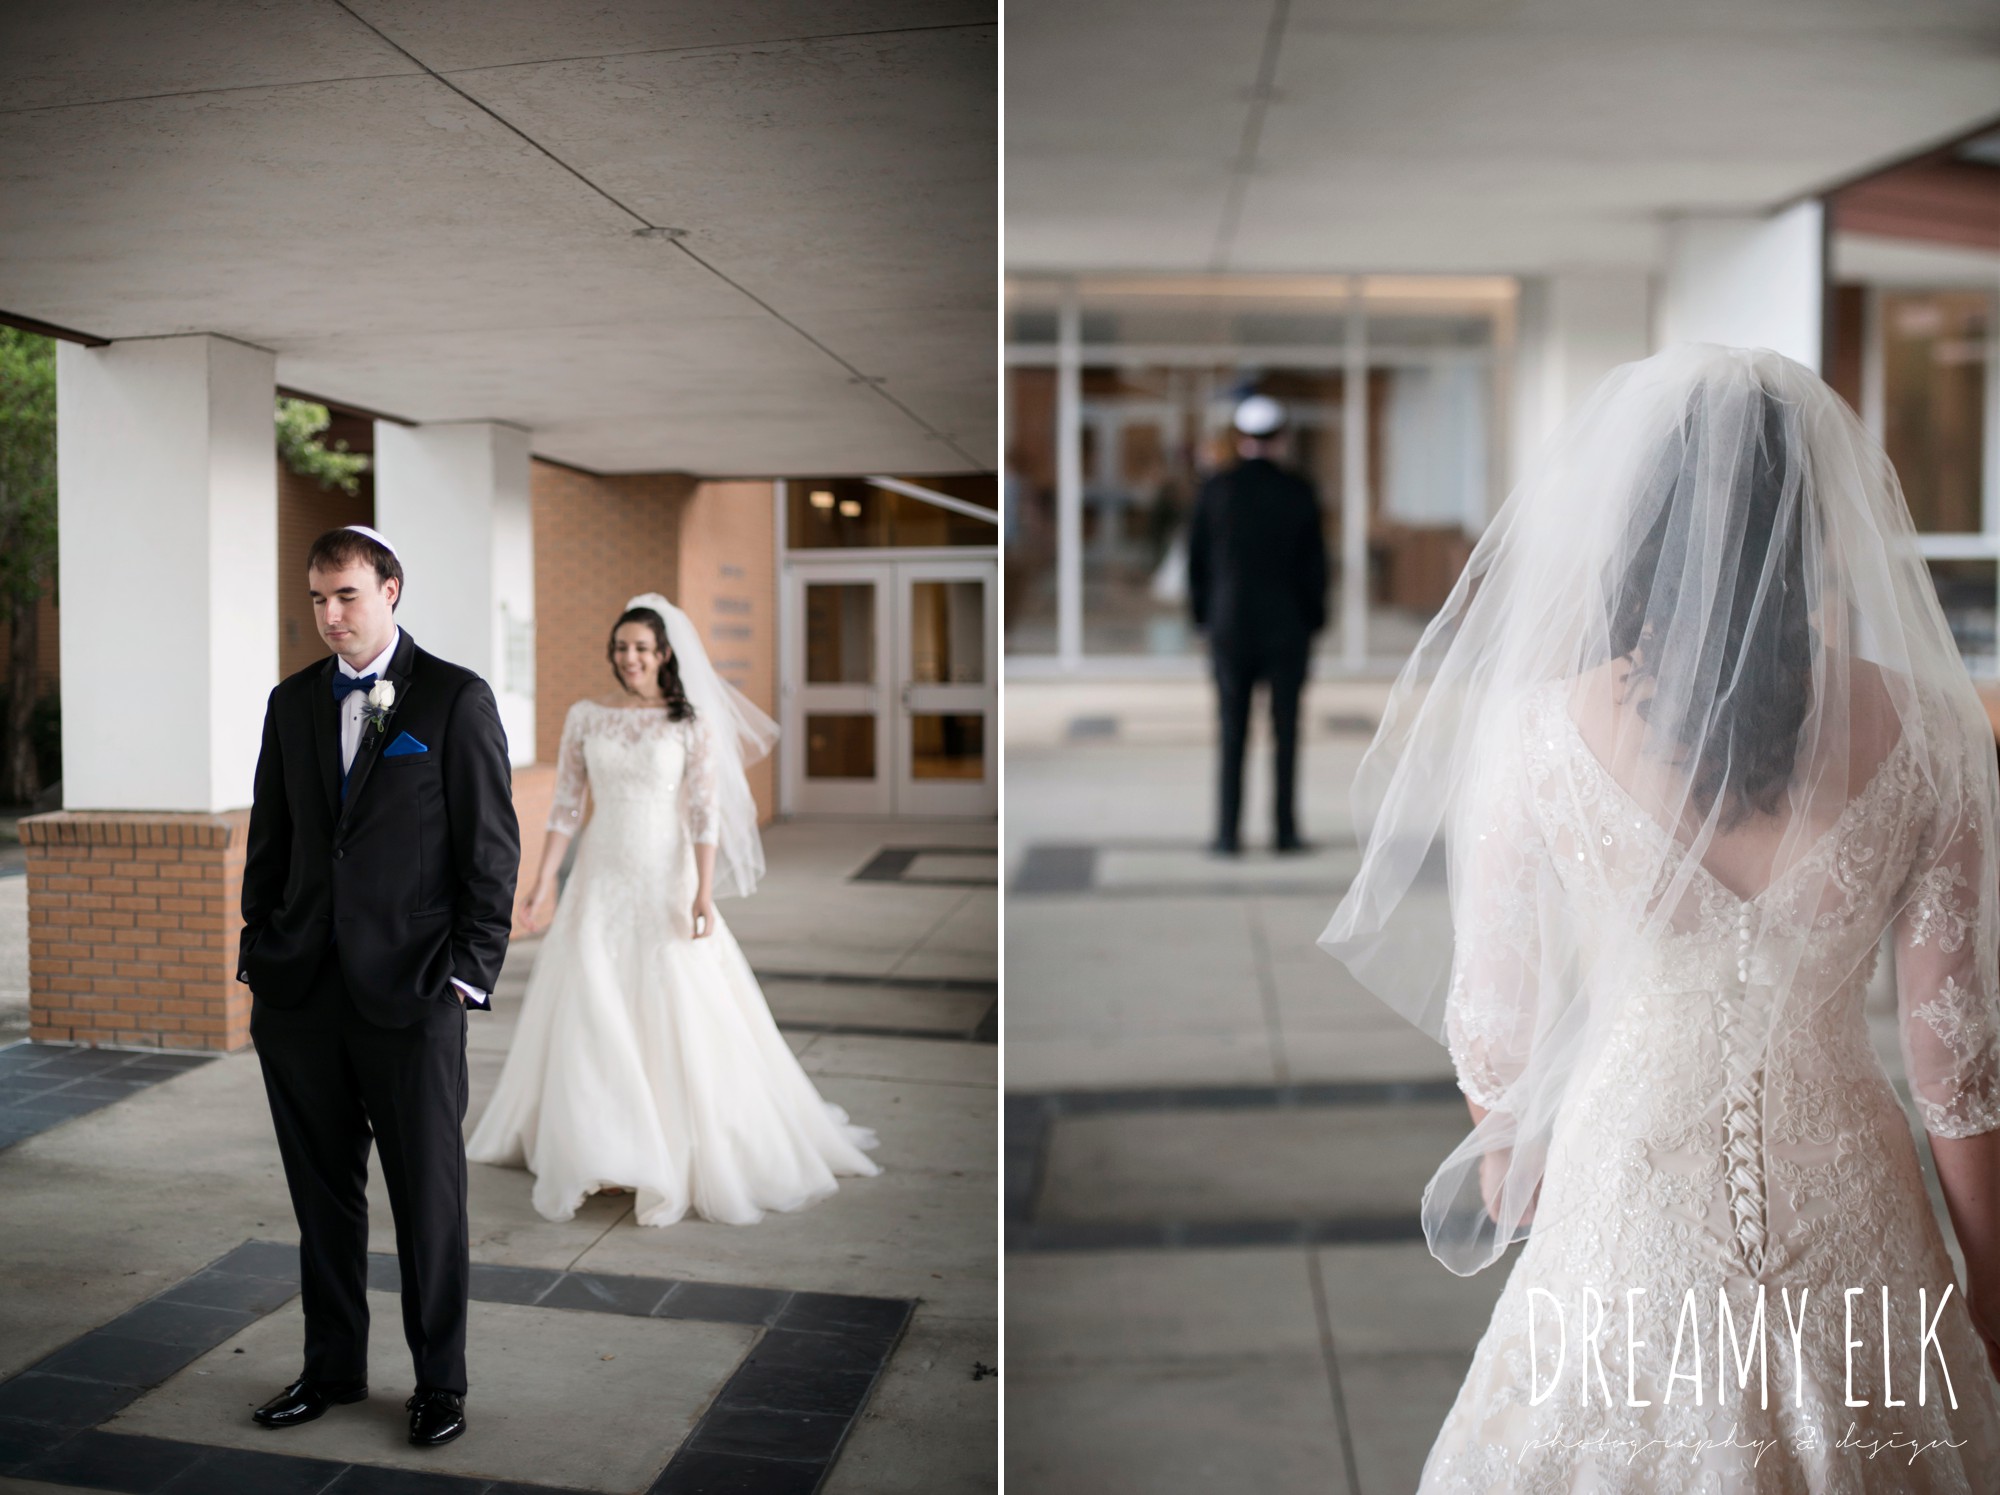 melanie&garrett {wedding} congregation beth yeshurun, houston, texas —  Dreamy Elk Photography & Design: Austin Wedding Photographer